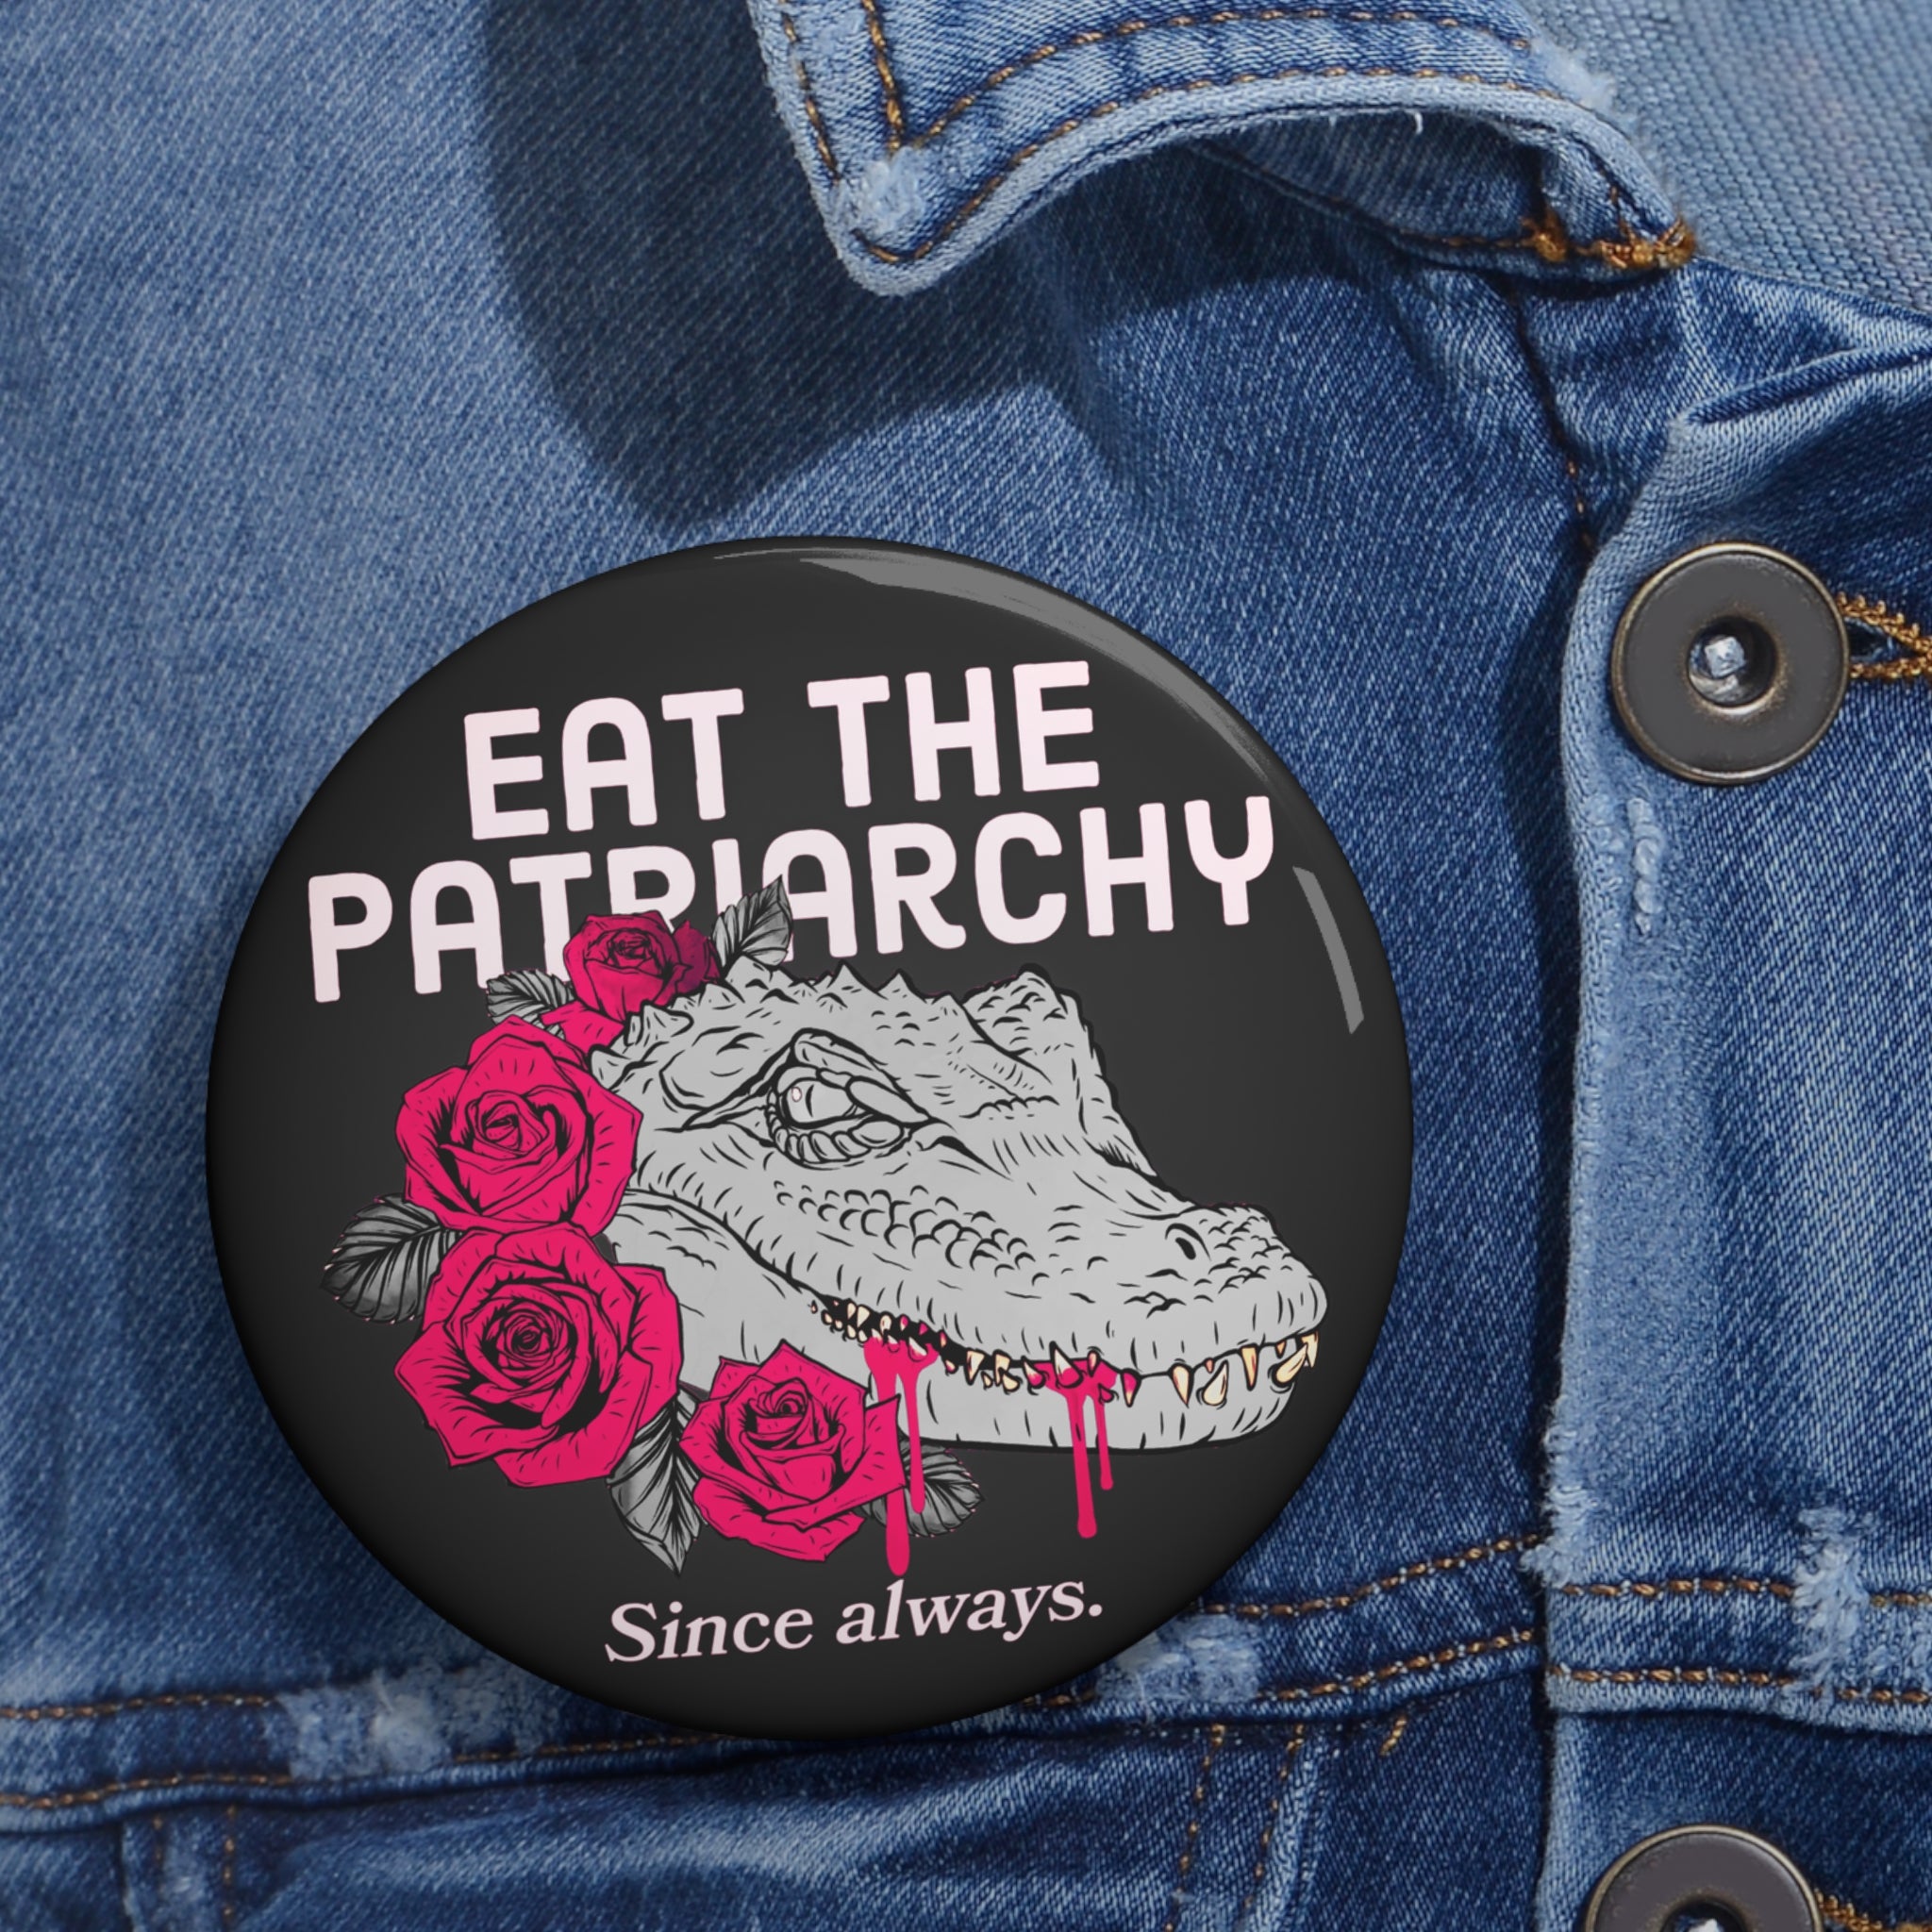 Devour the Patriarchy 🐅 Women's Feminist Themed Athletic Jogger Pants –  The Bullish Store